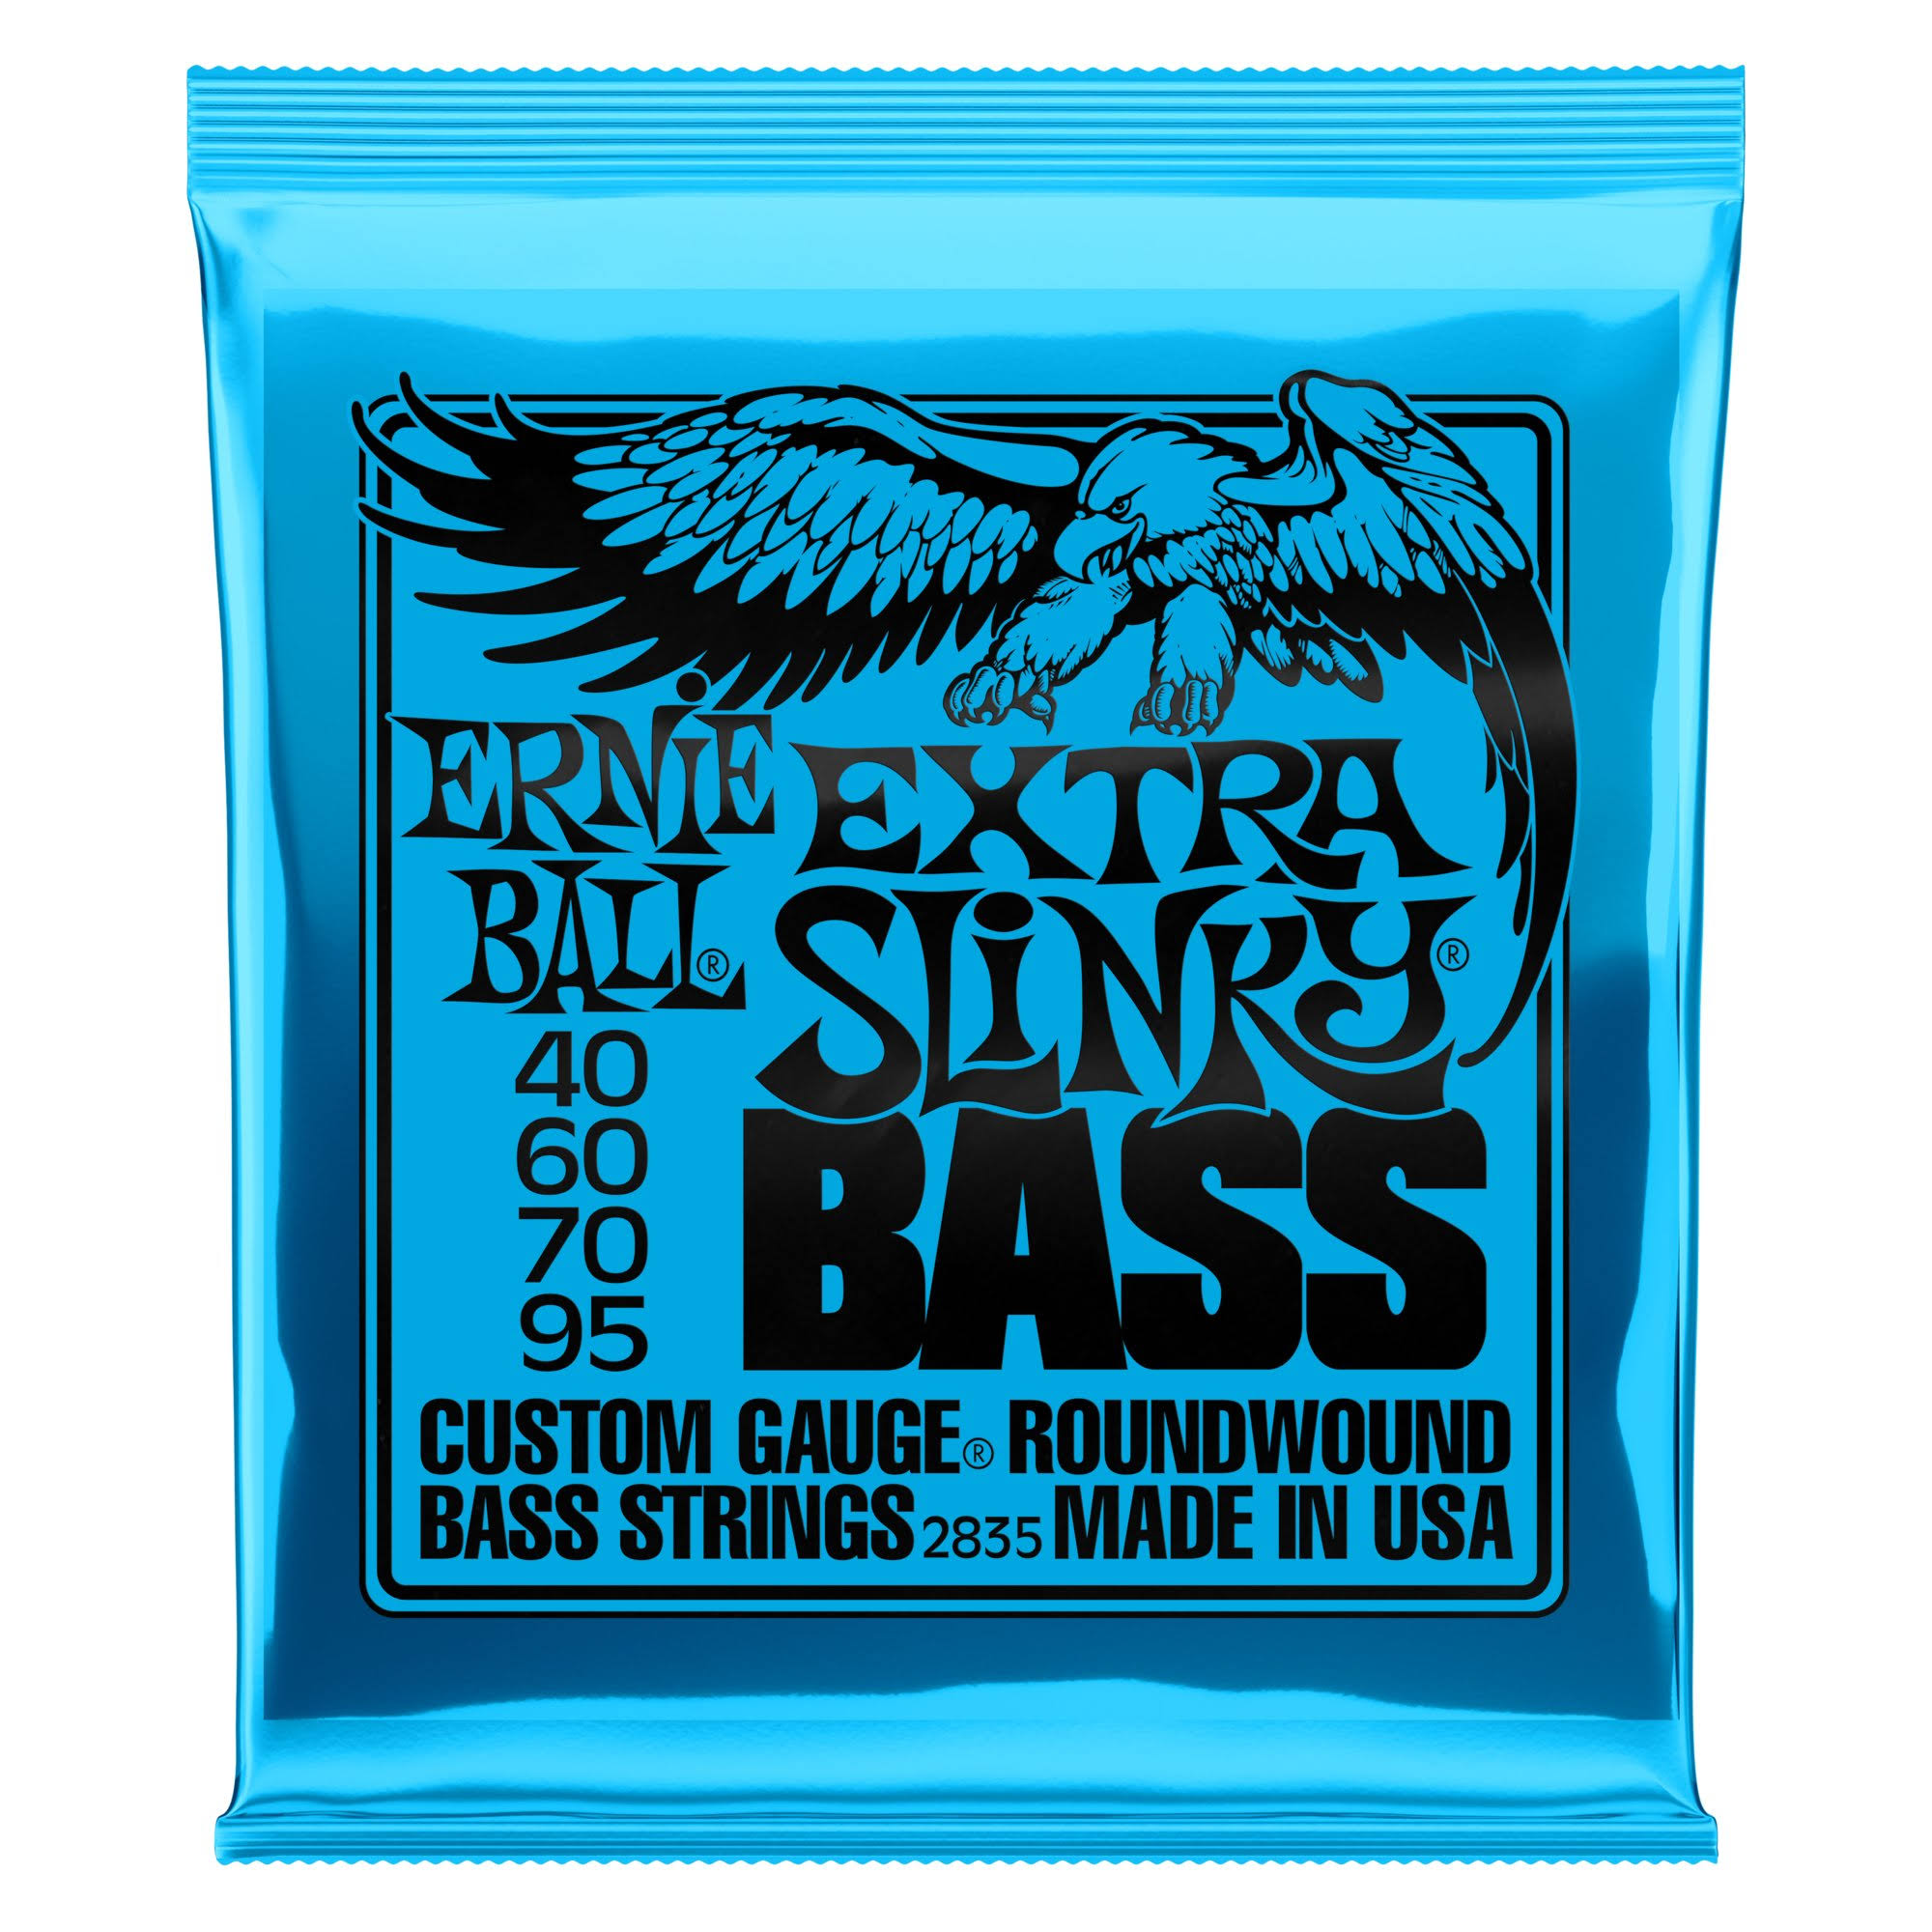 Ernie Ball Nickel Wound Bass Strings - Extra Slinky, 40-95